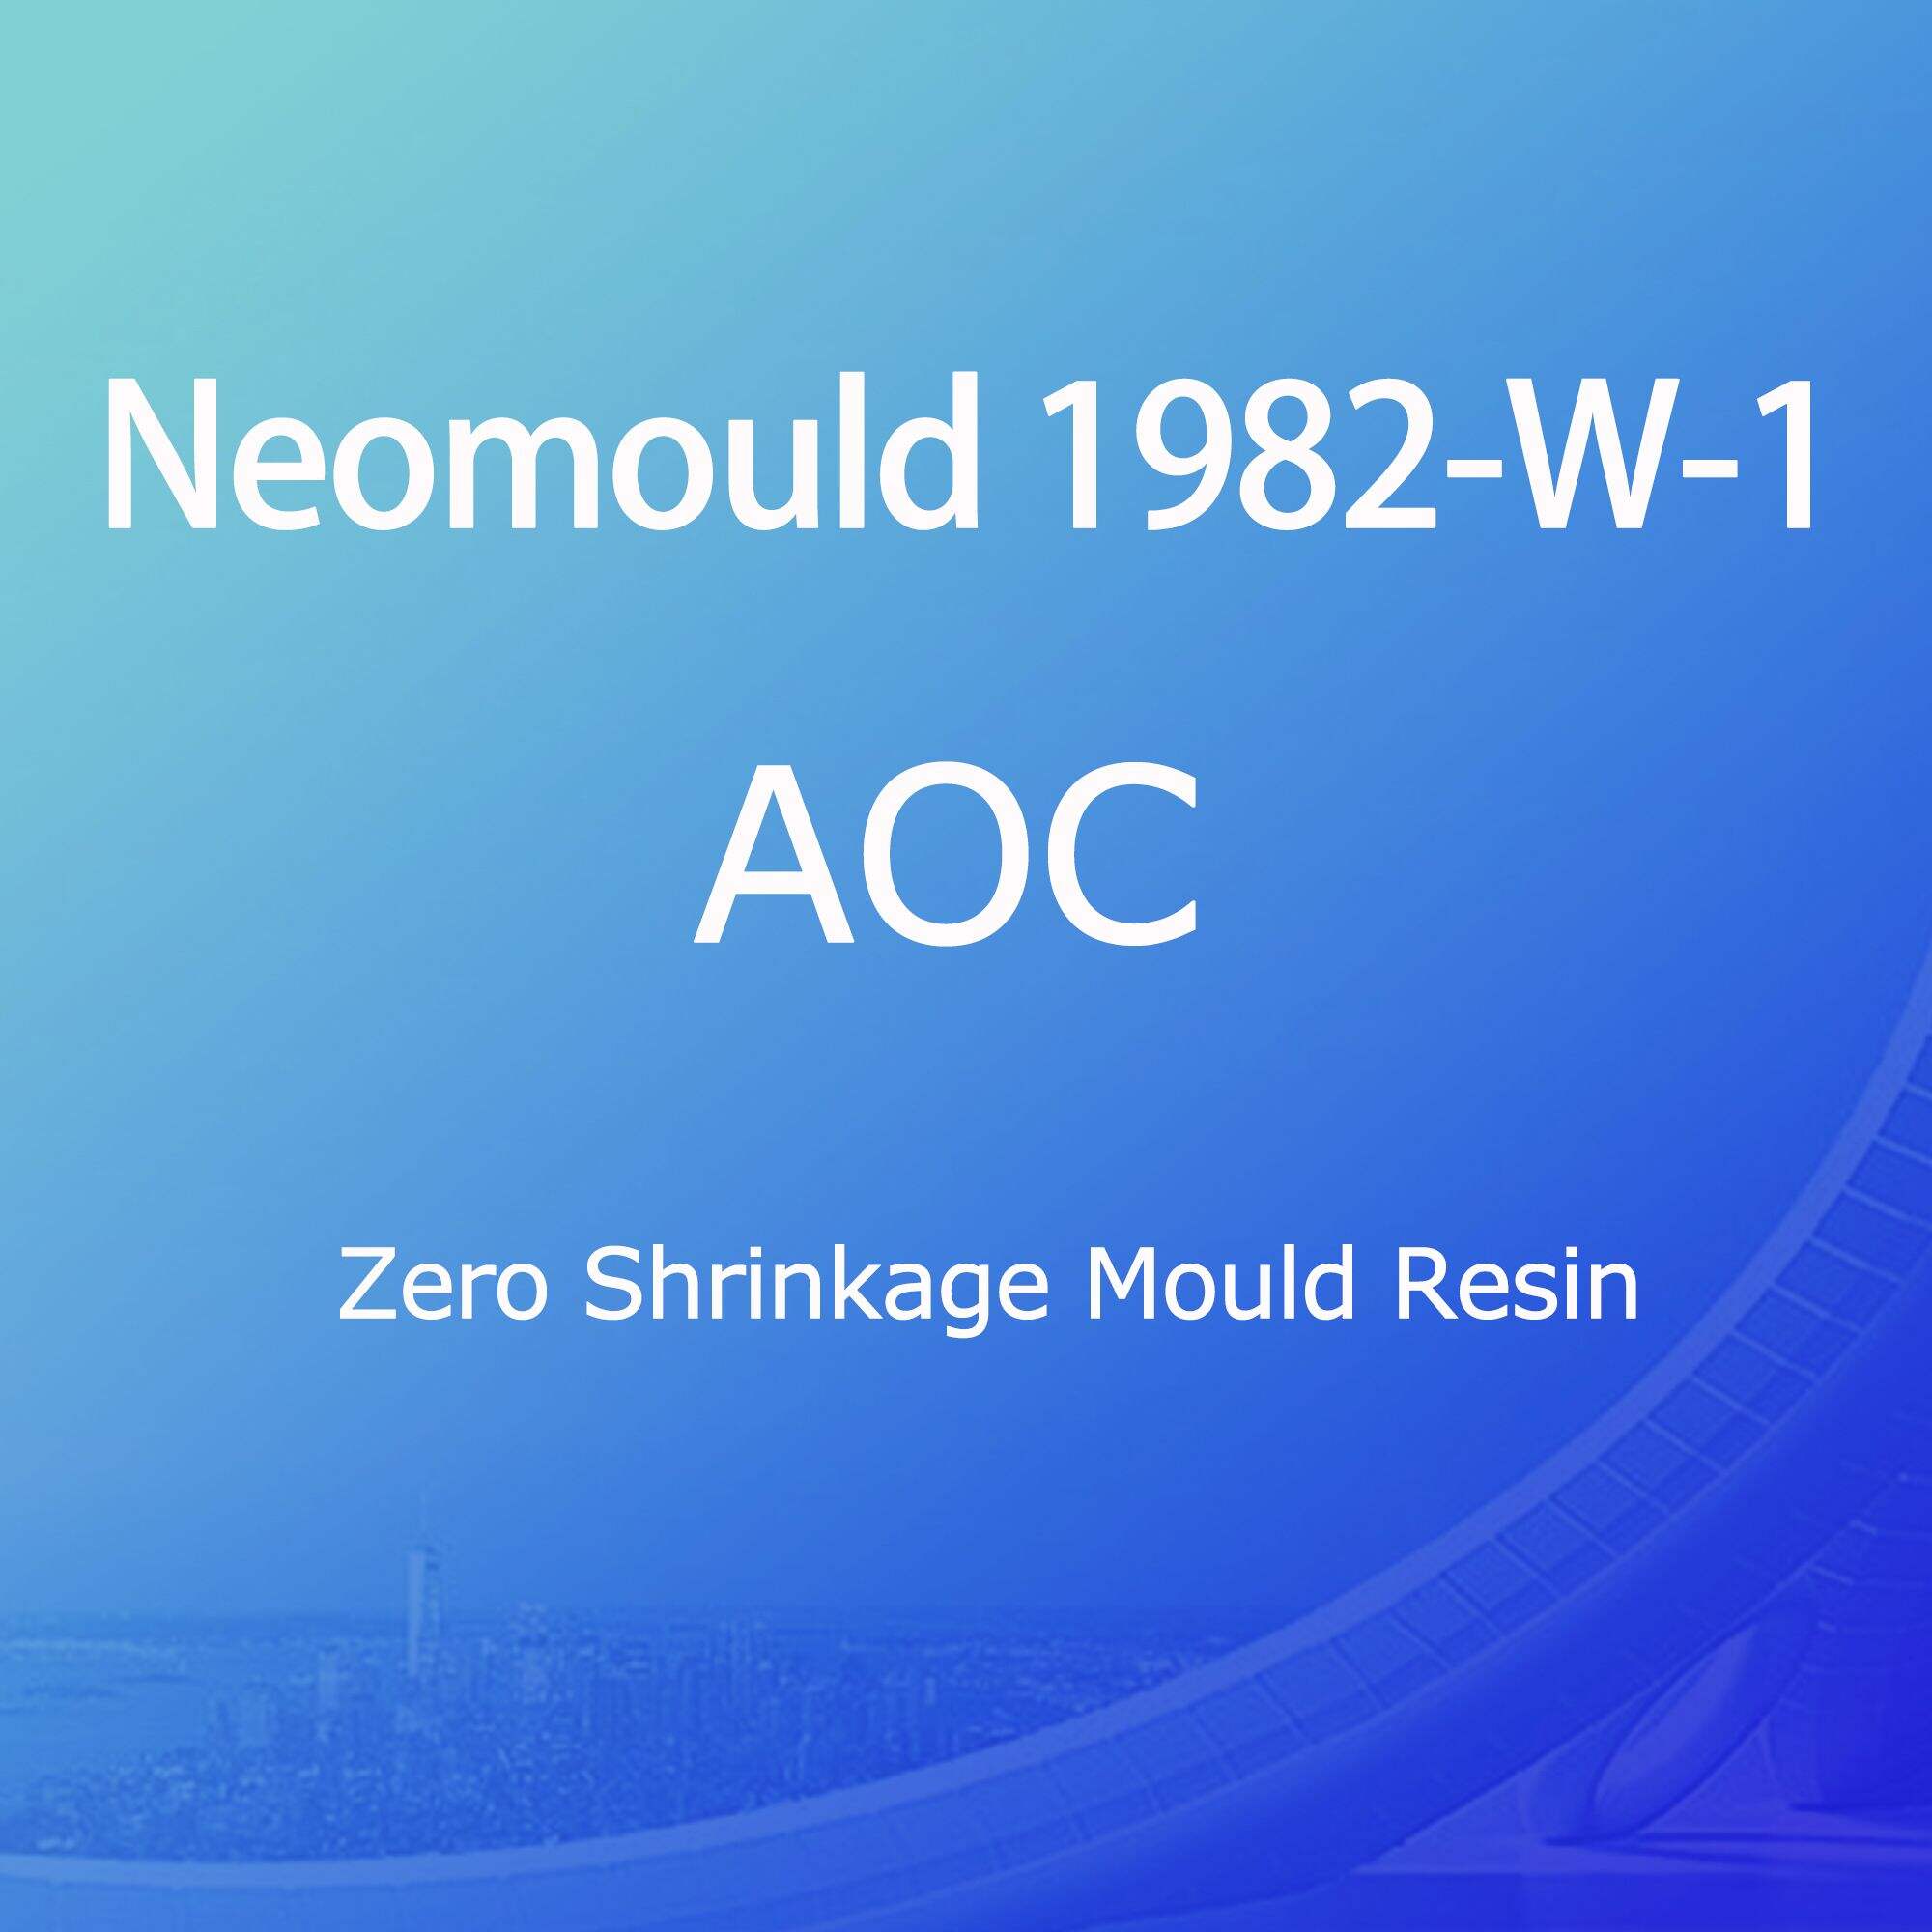 Neomould 1982-W-1(AOC),Zero Shrinkage Mould Resin